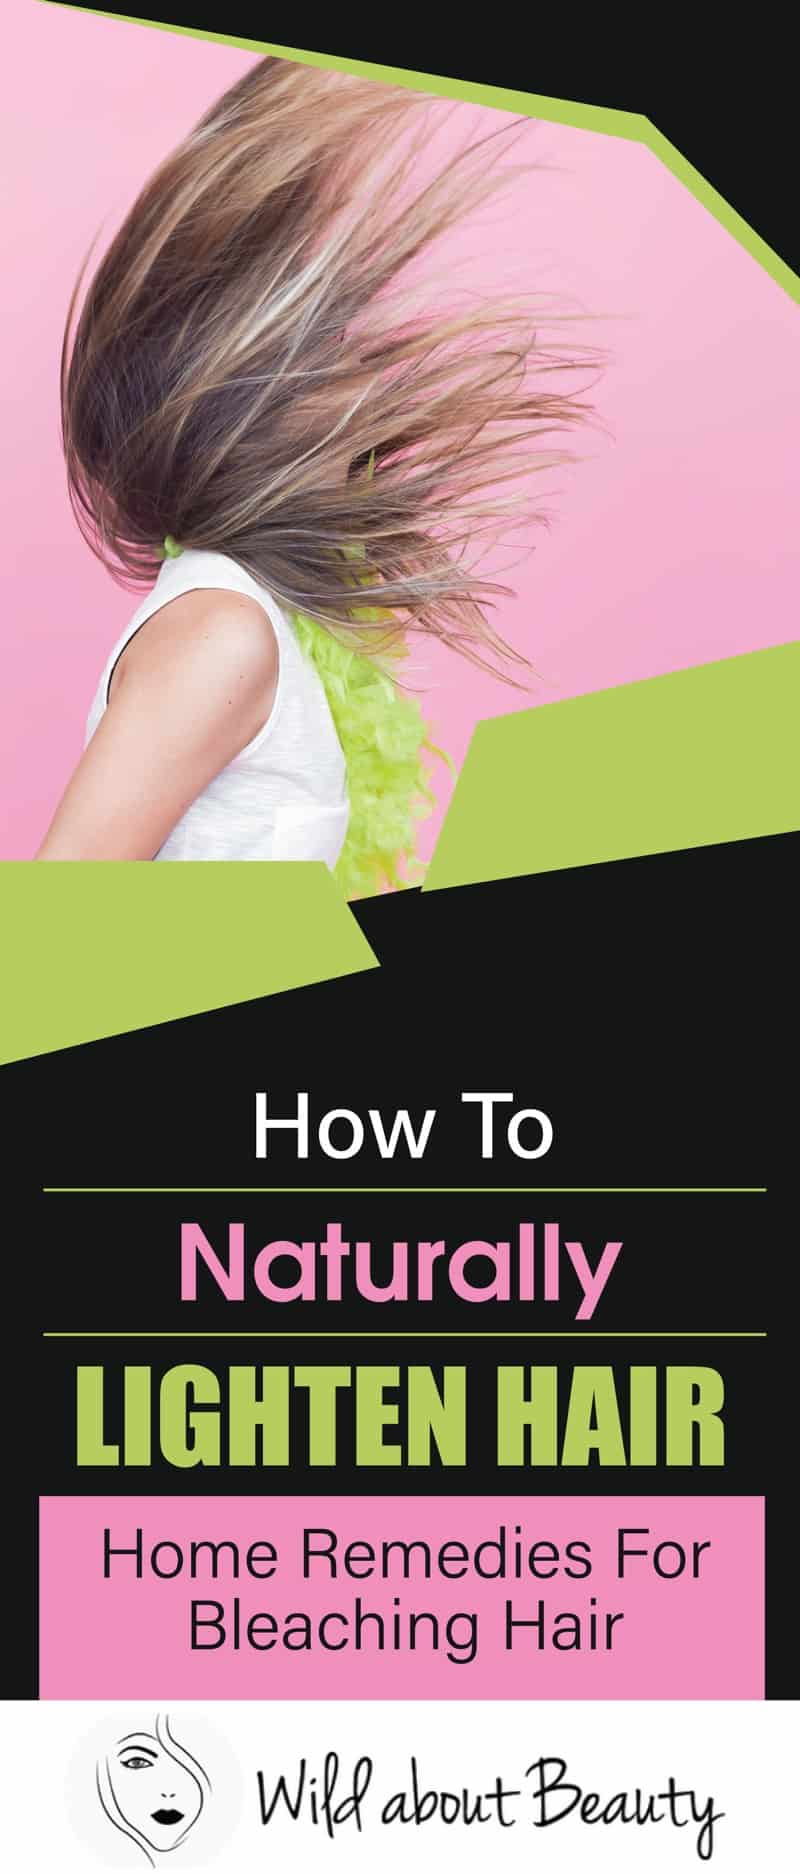 How To Naturally Lighten Hair